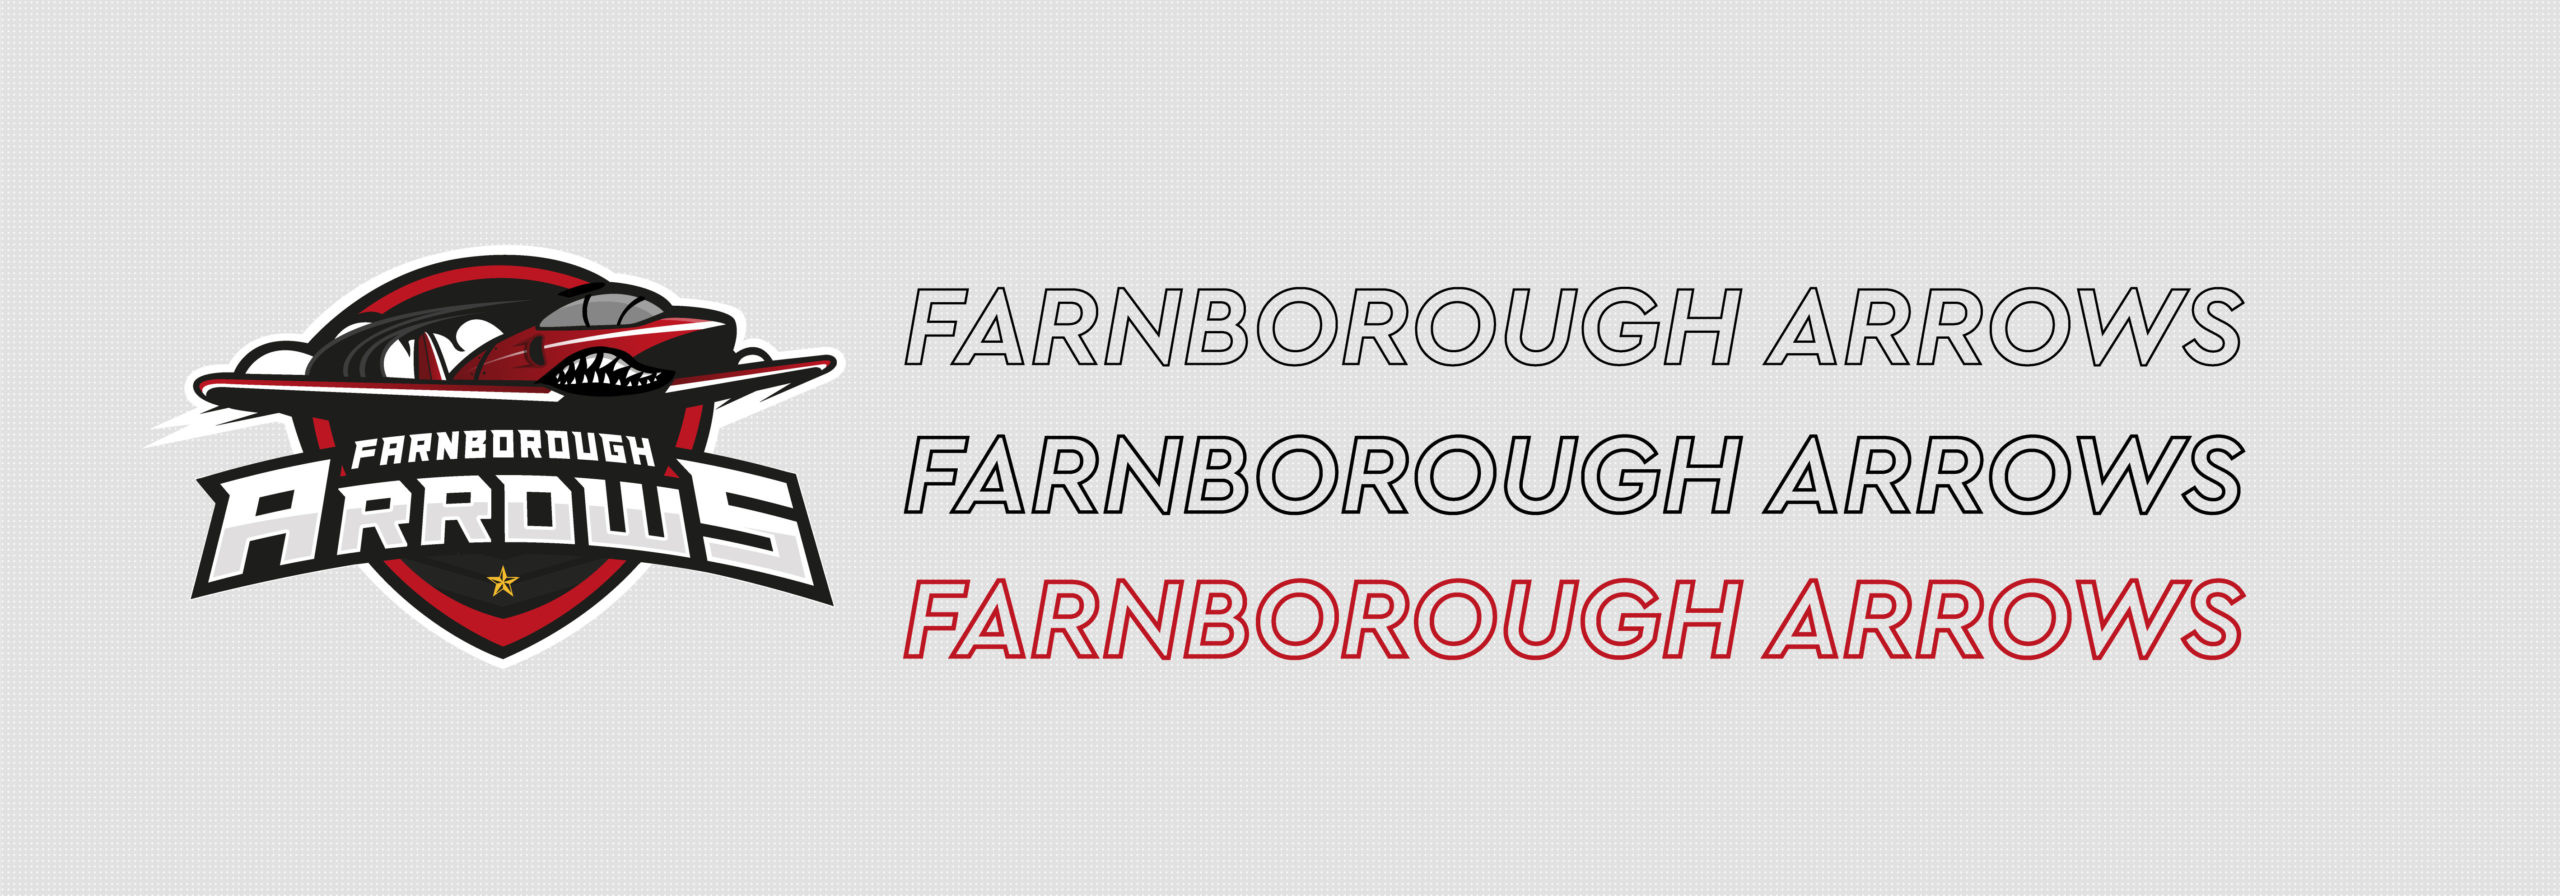 Farnborough Arrows Long Pants